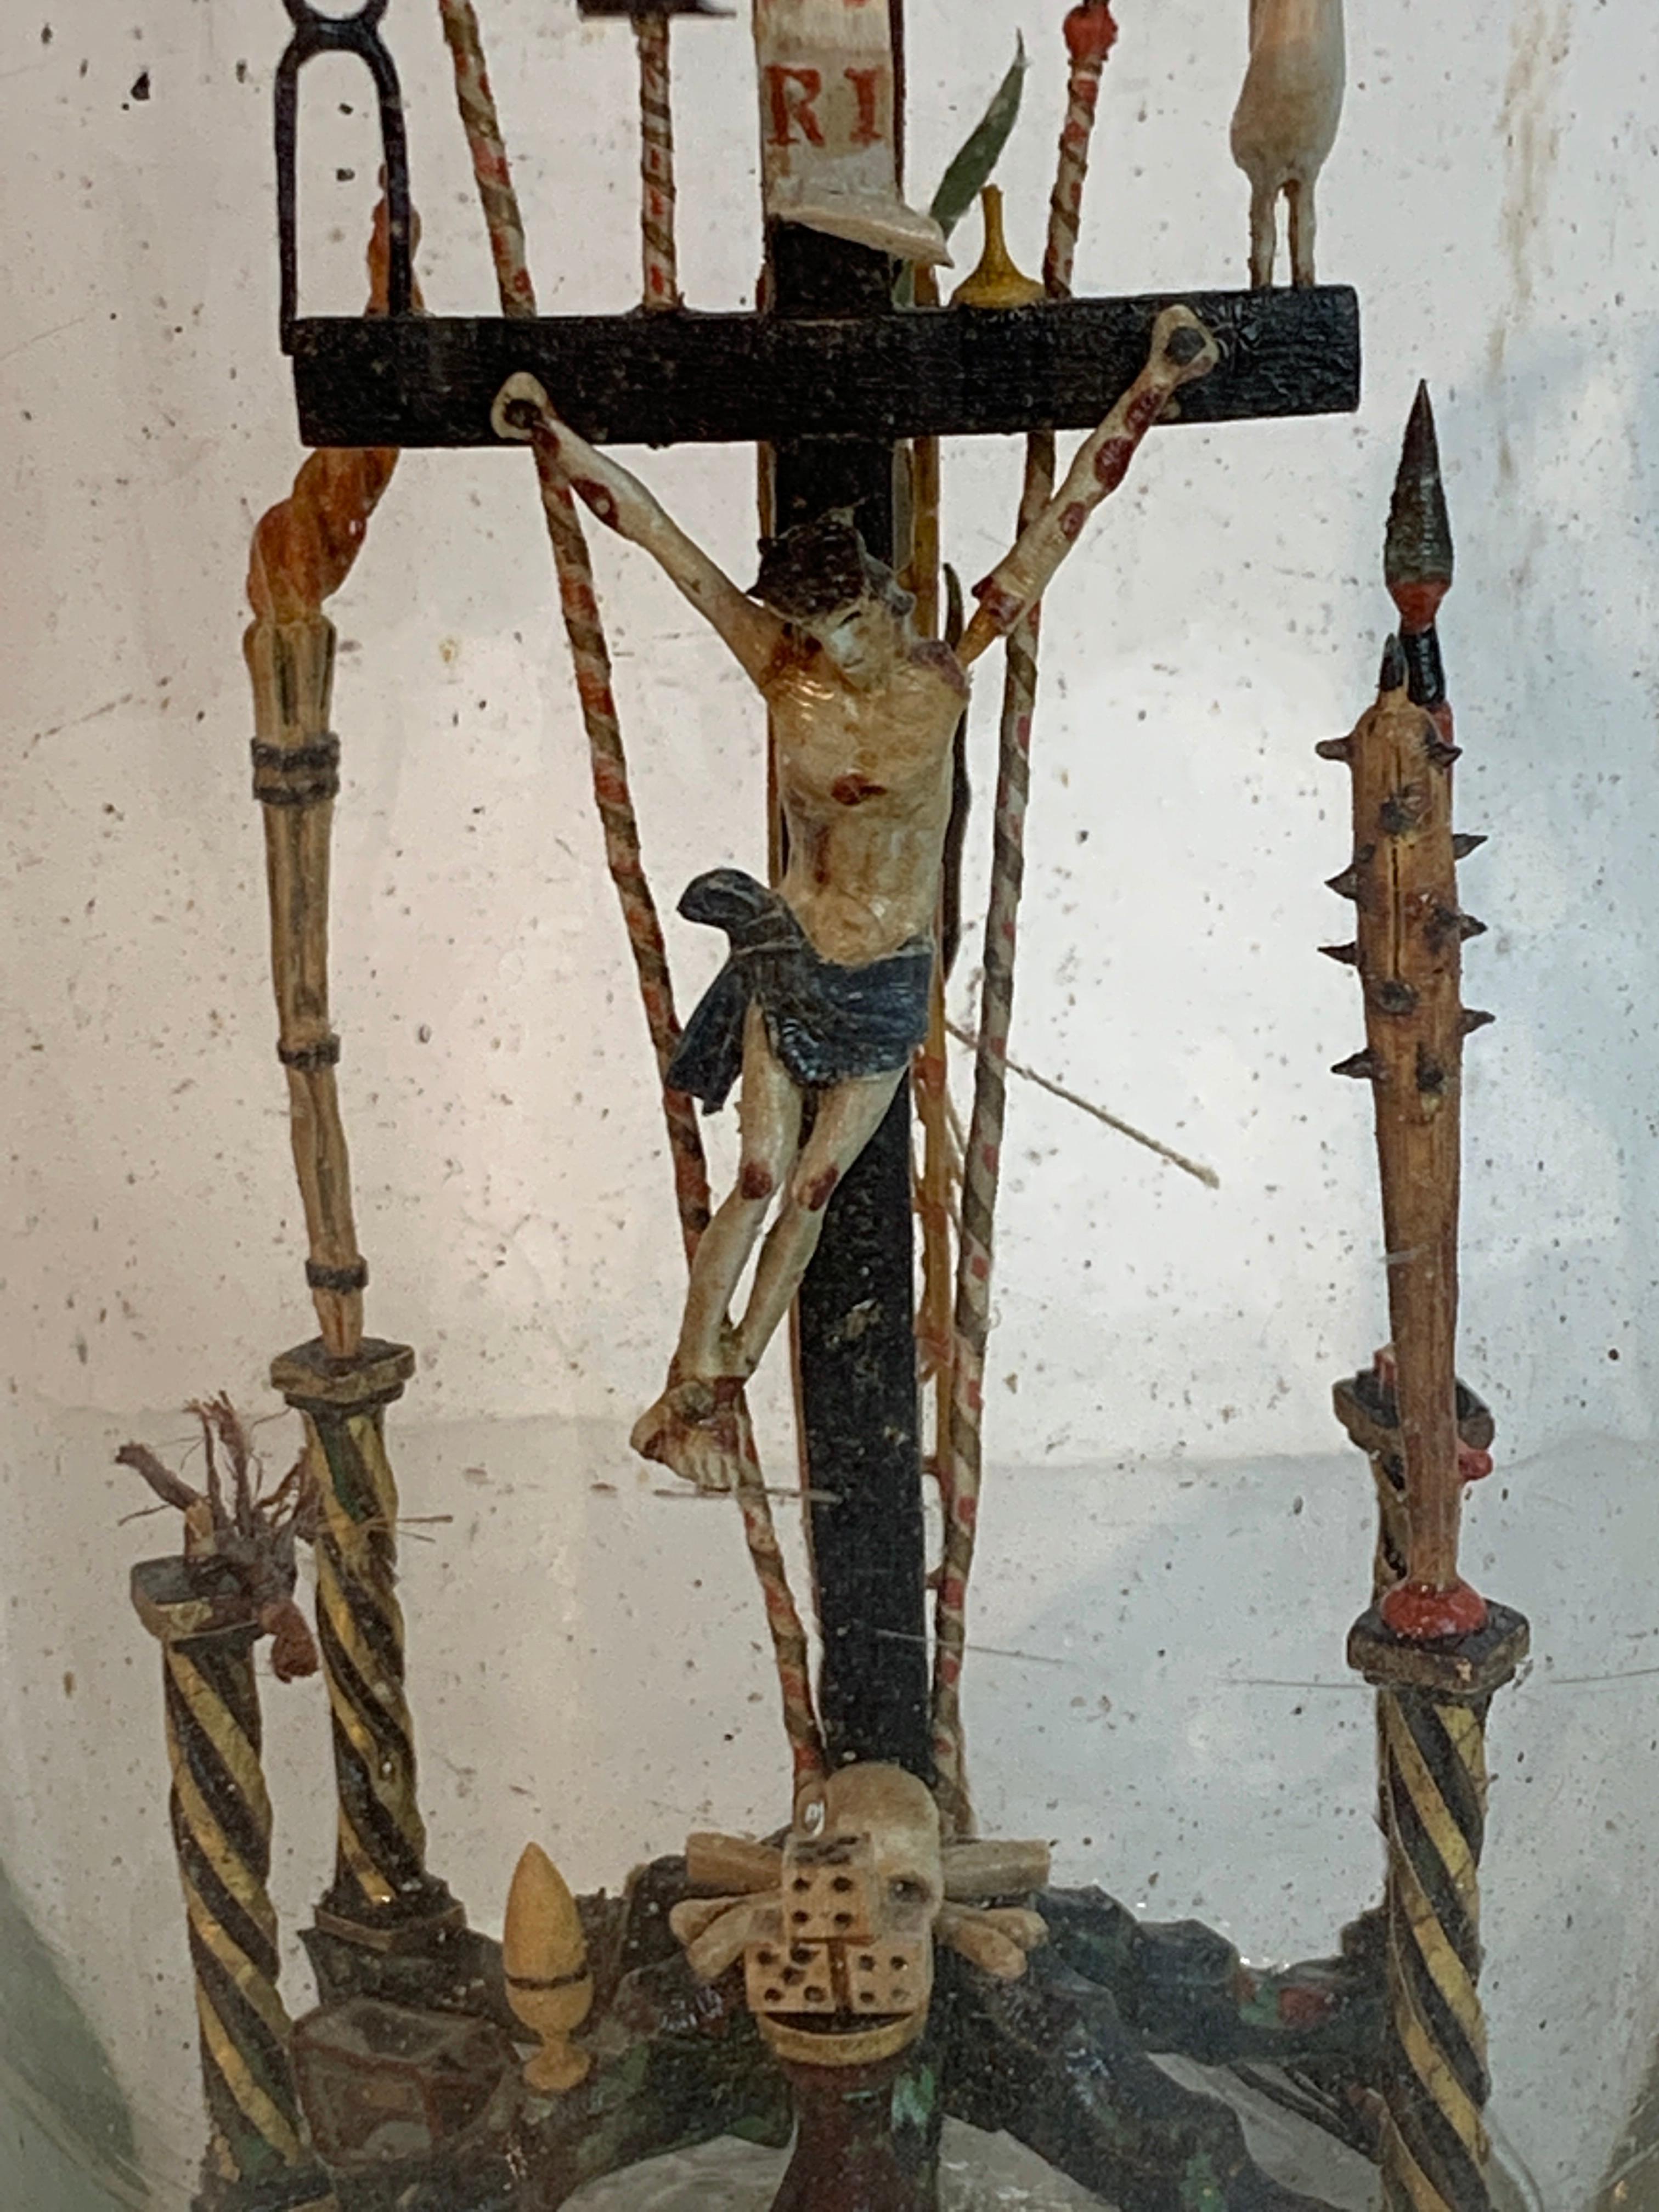 Hand-Carved Folk Art Crucifixion Scene in a Bottle